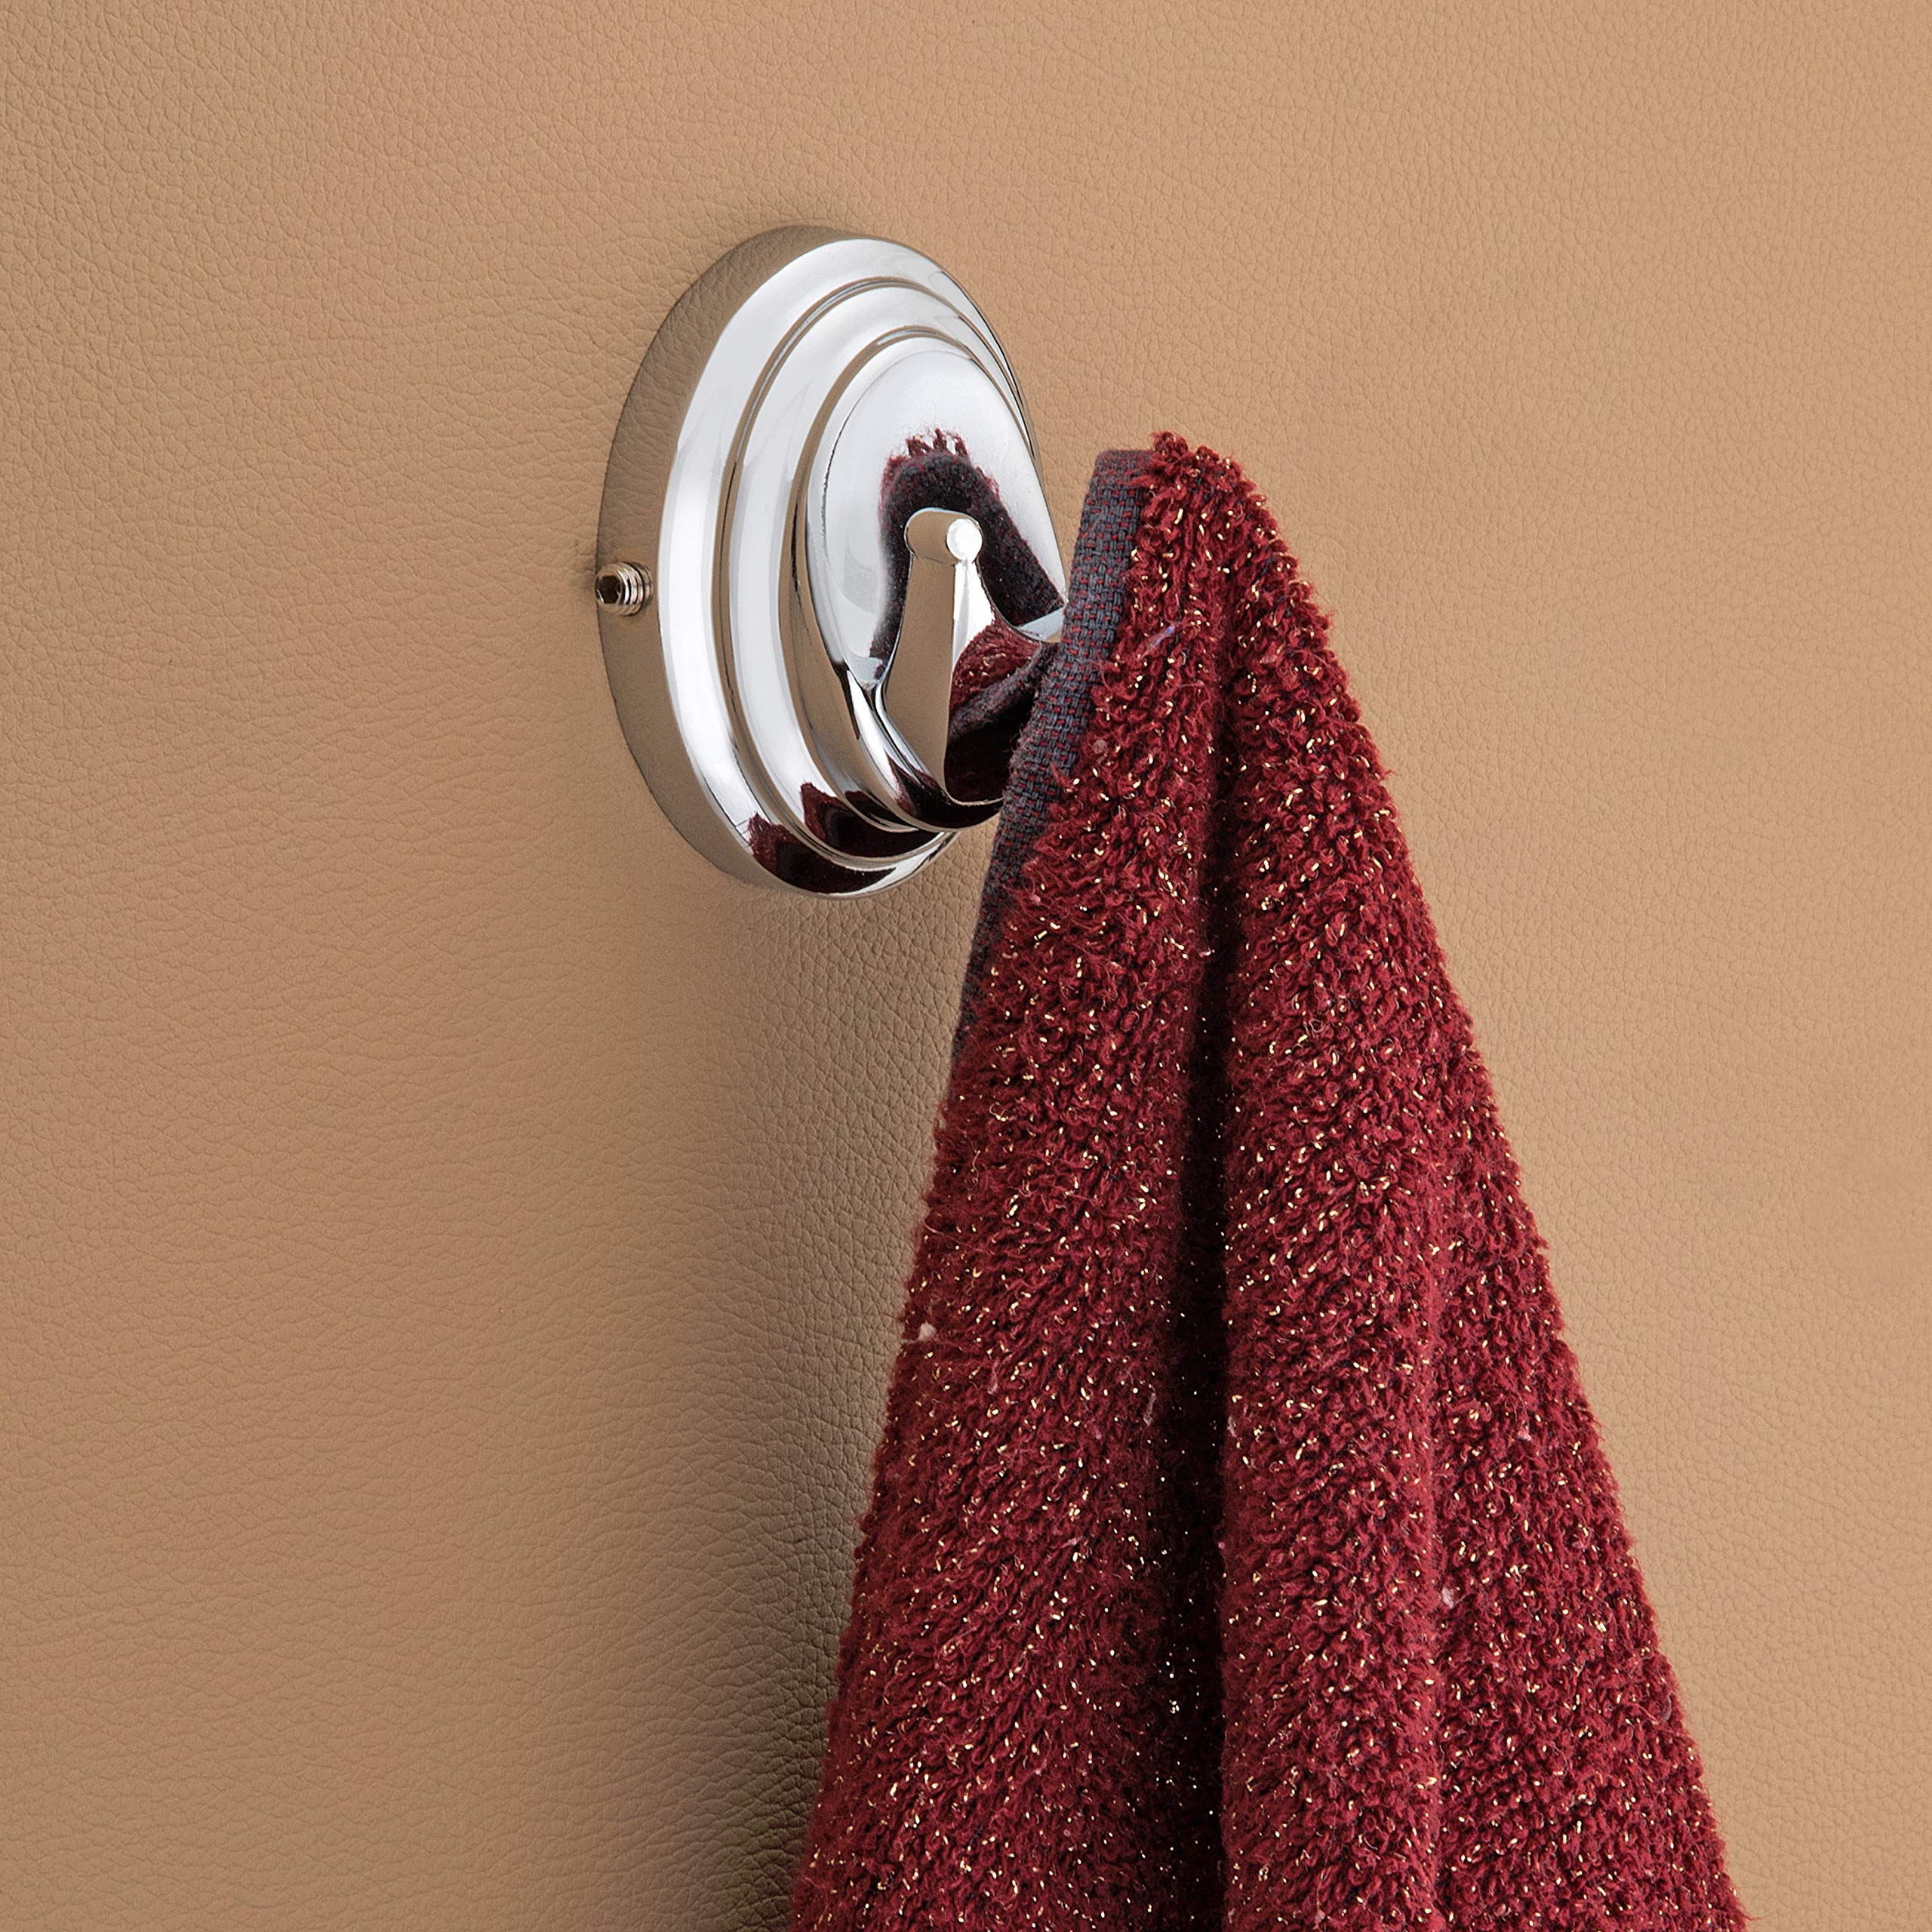 Plantex Stainless Steel 304 Grade Bathroom Accessories Set/Bathroom Hanger for Towel/Towel Bar/Napkin Ring/Tumbler Holder/Soap Dish/Robe Hook (Cubic - Pack of 5)